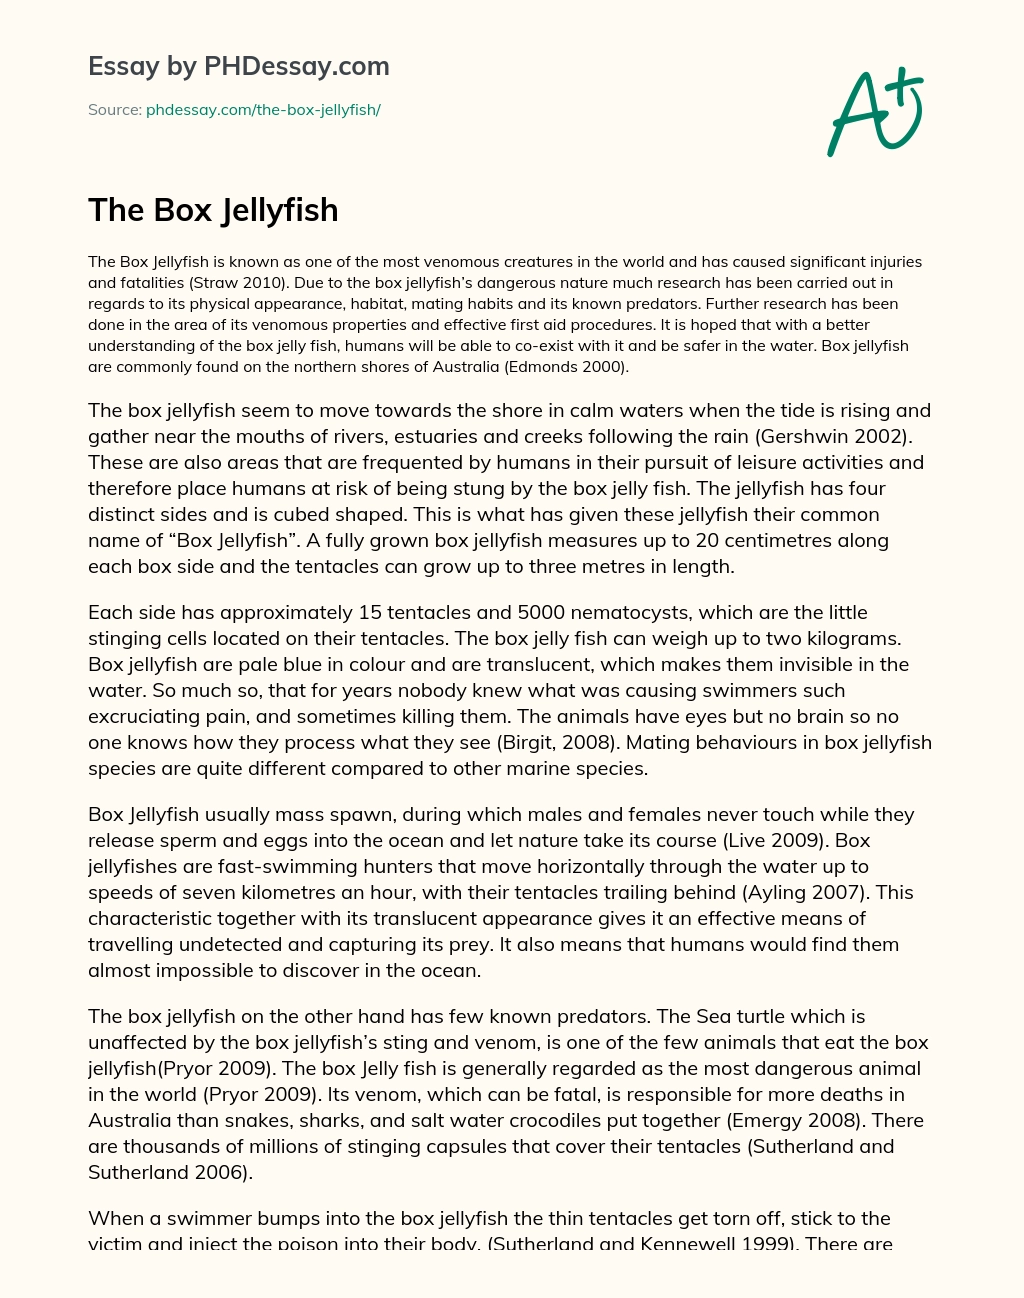 The Box Jellyfish essay